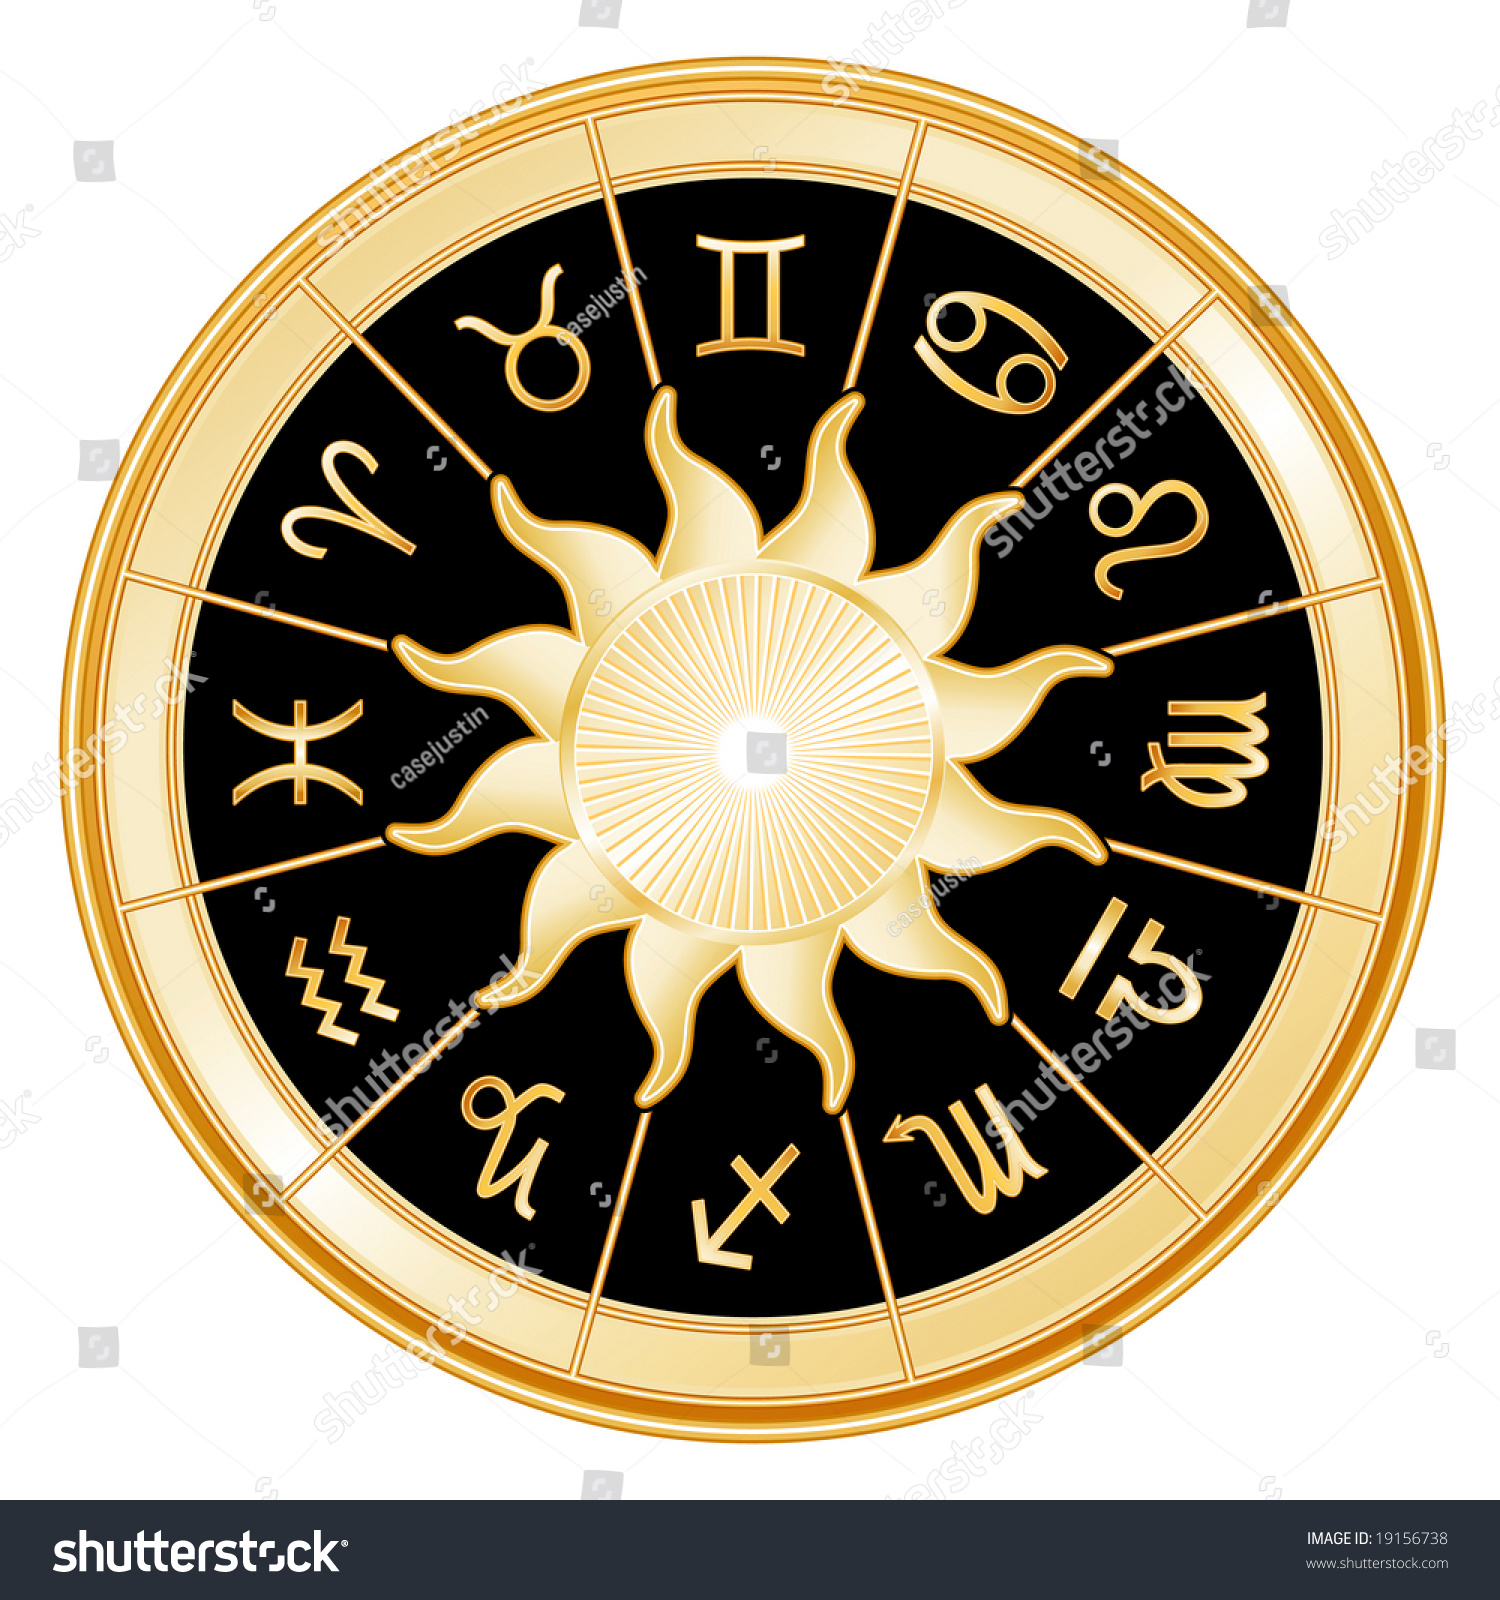 Horoscope Signs Zodiac 12 Astrology Symbols Stock Illustration 19156738 - Shutterstock